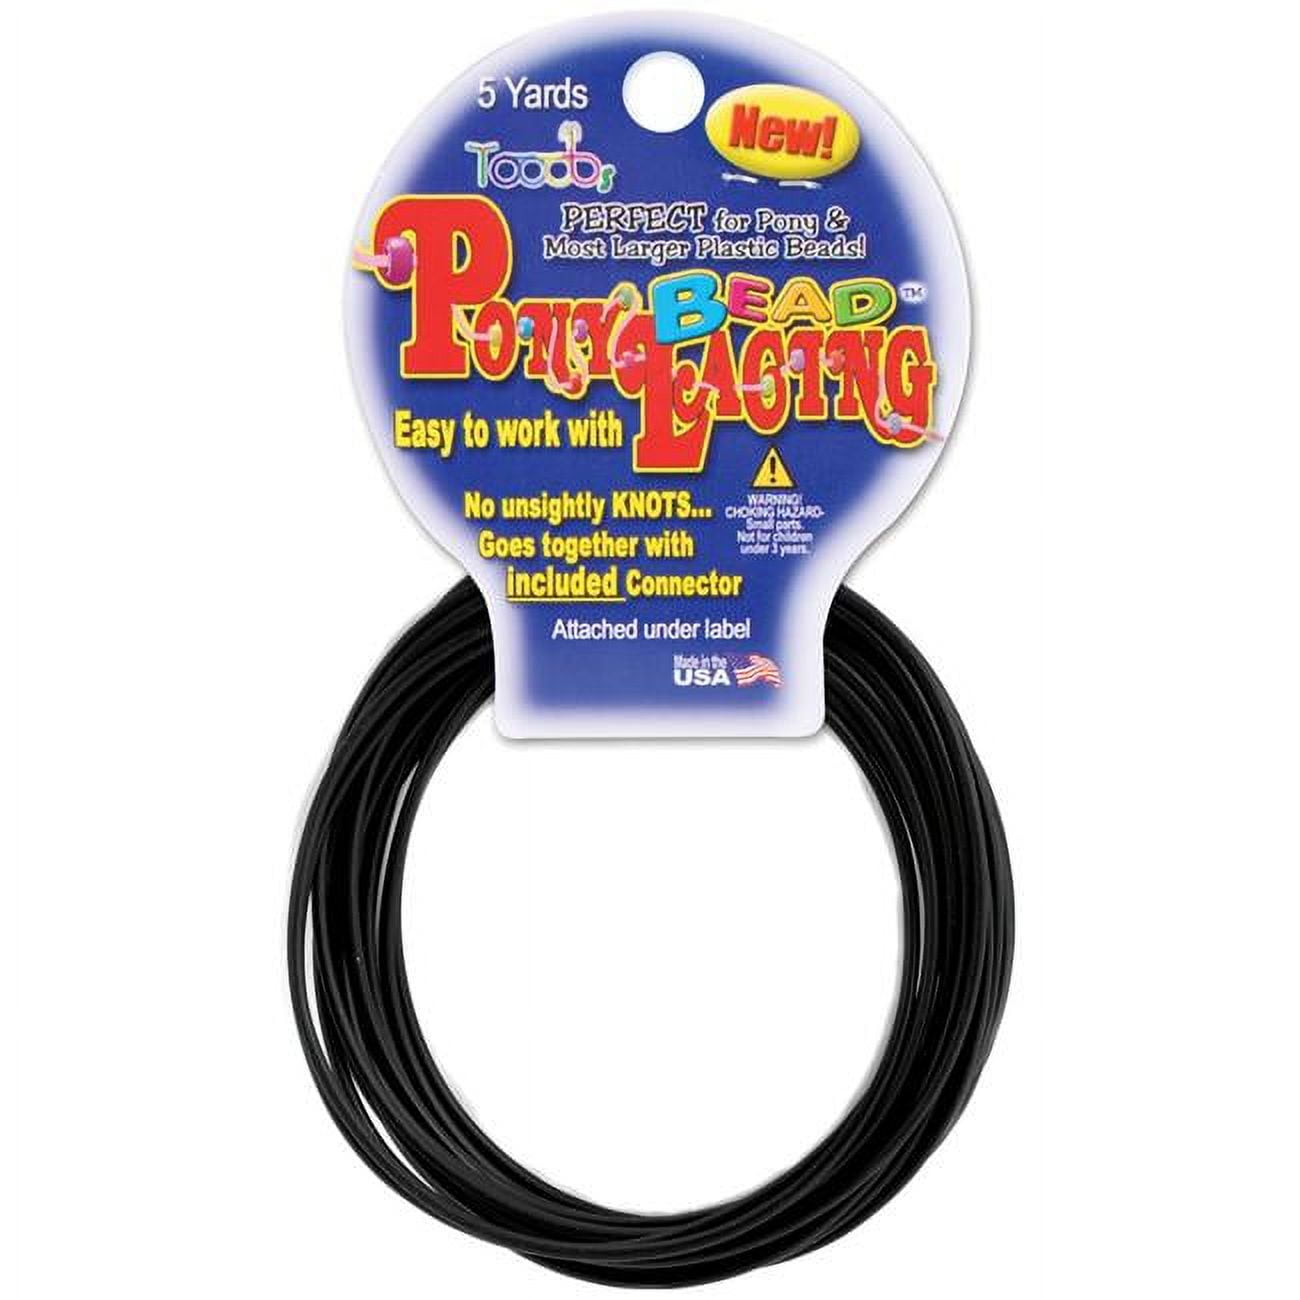 7632V052 – 12x10mm Heart Pony Bead – Black – 500 Piece Value Pack